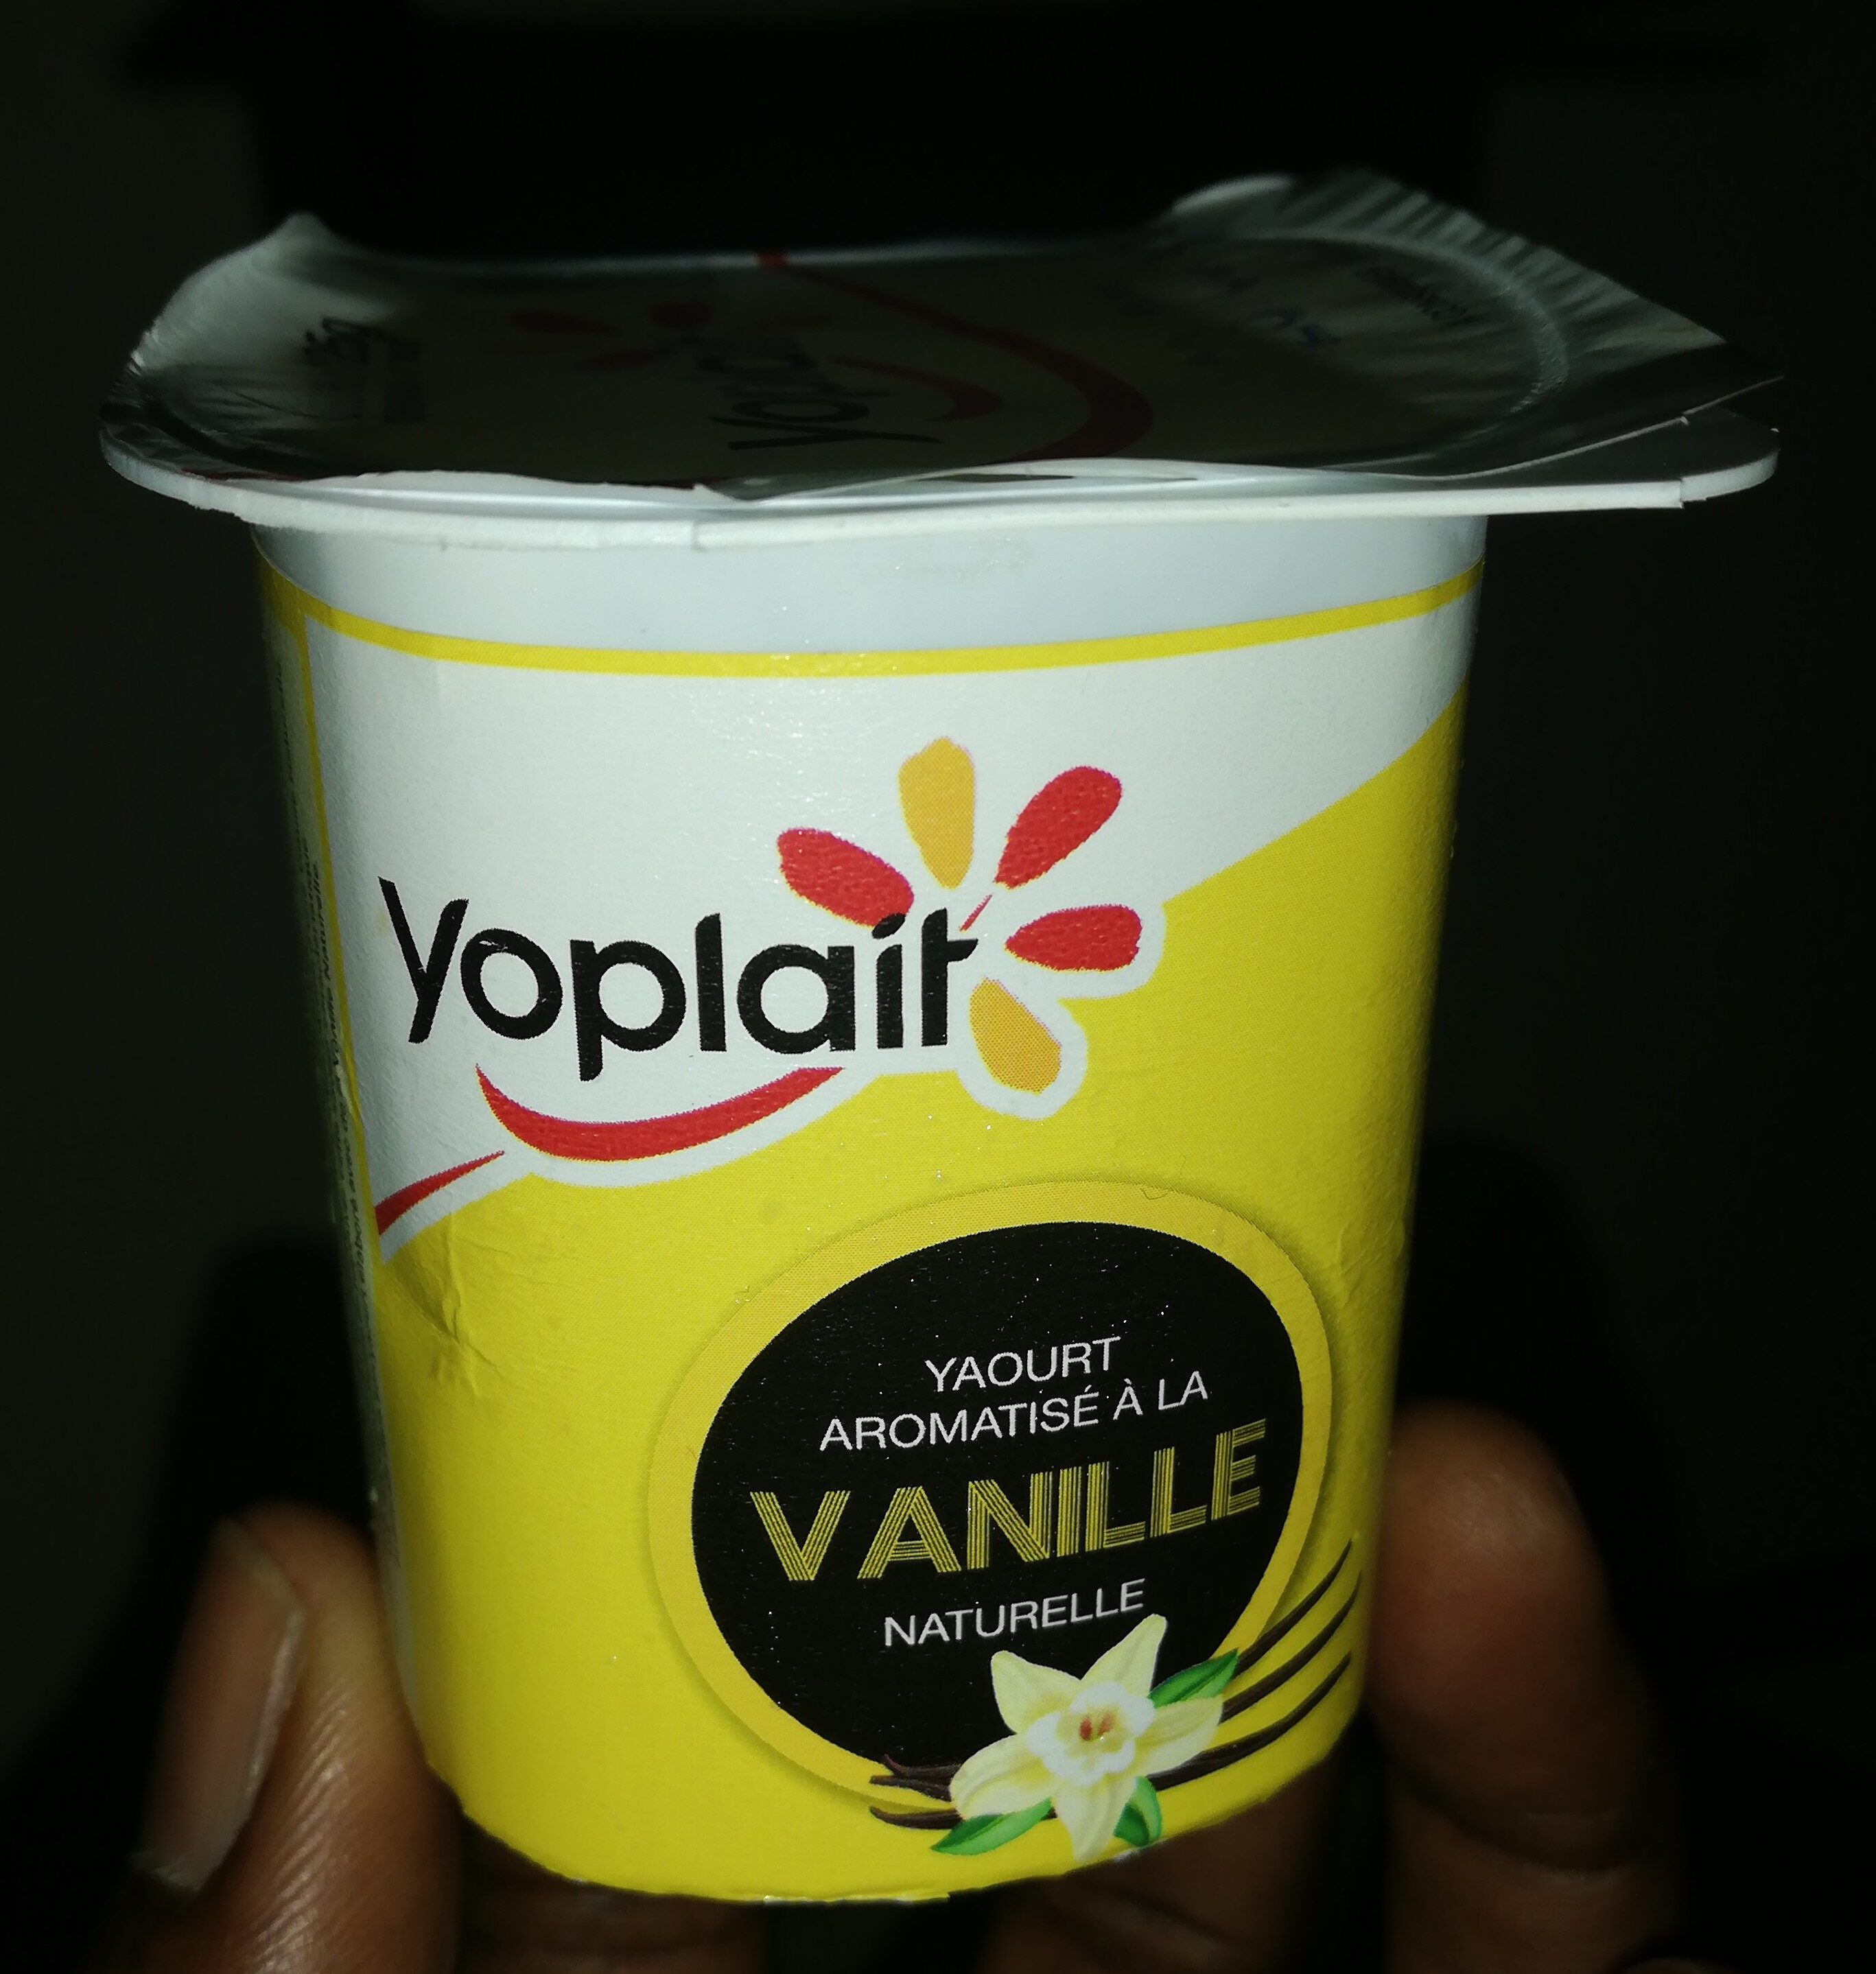 yoplait vanille - Product - fr